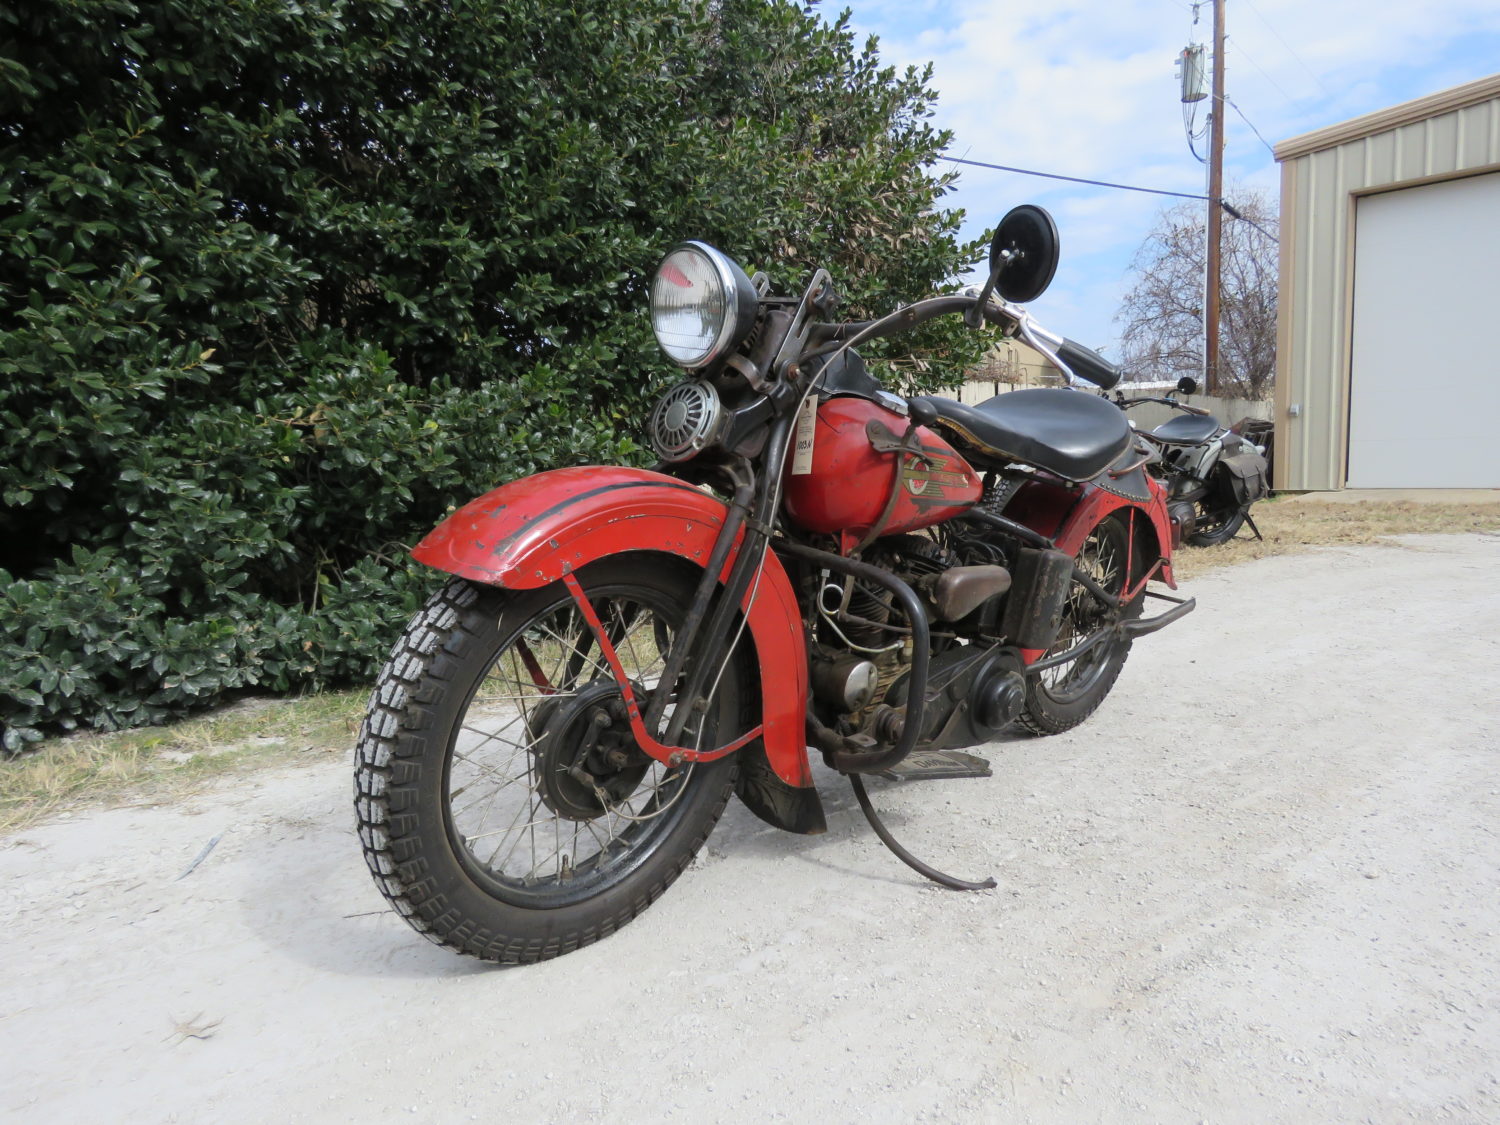 Vintage Harley Davidson Motorcycles & Parts Auction- The Jon Neuman Vintage Harley Davidson Collection  - image 4